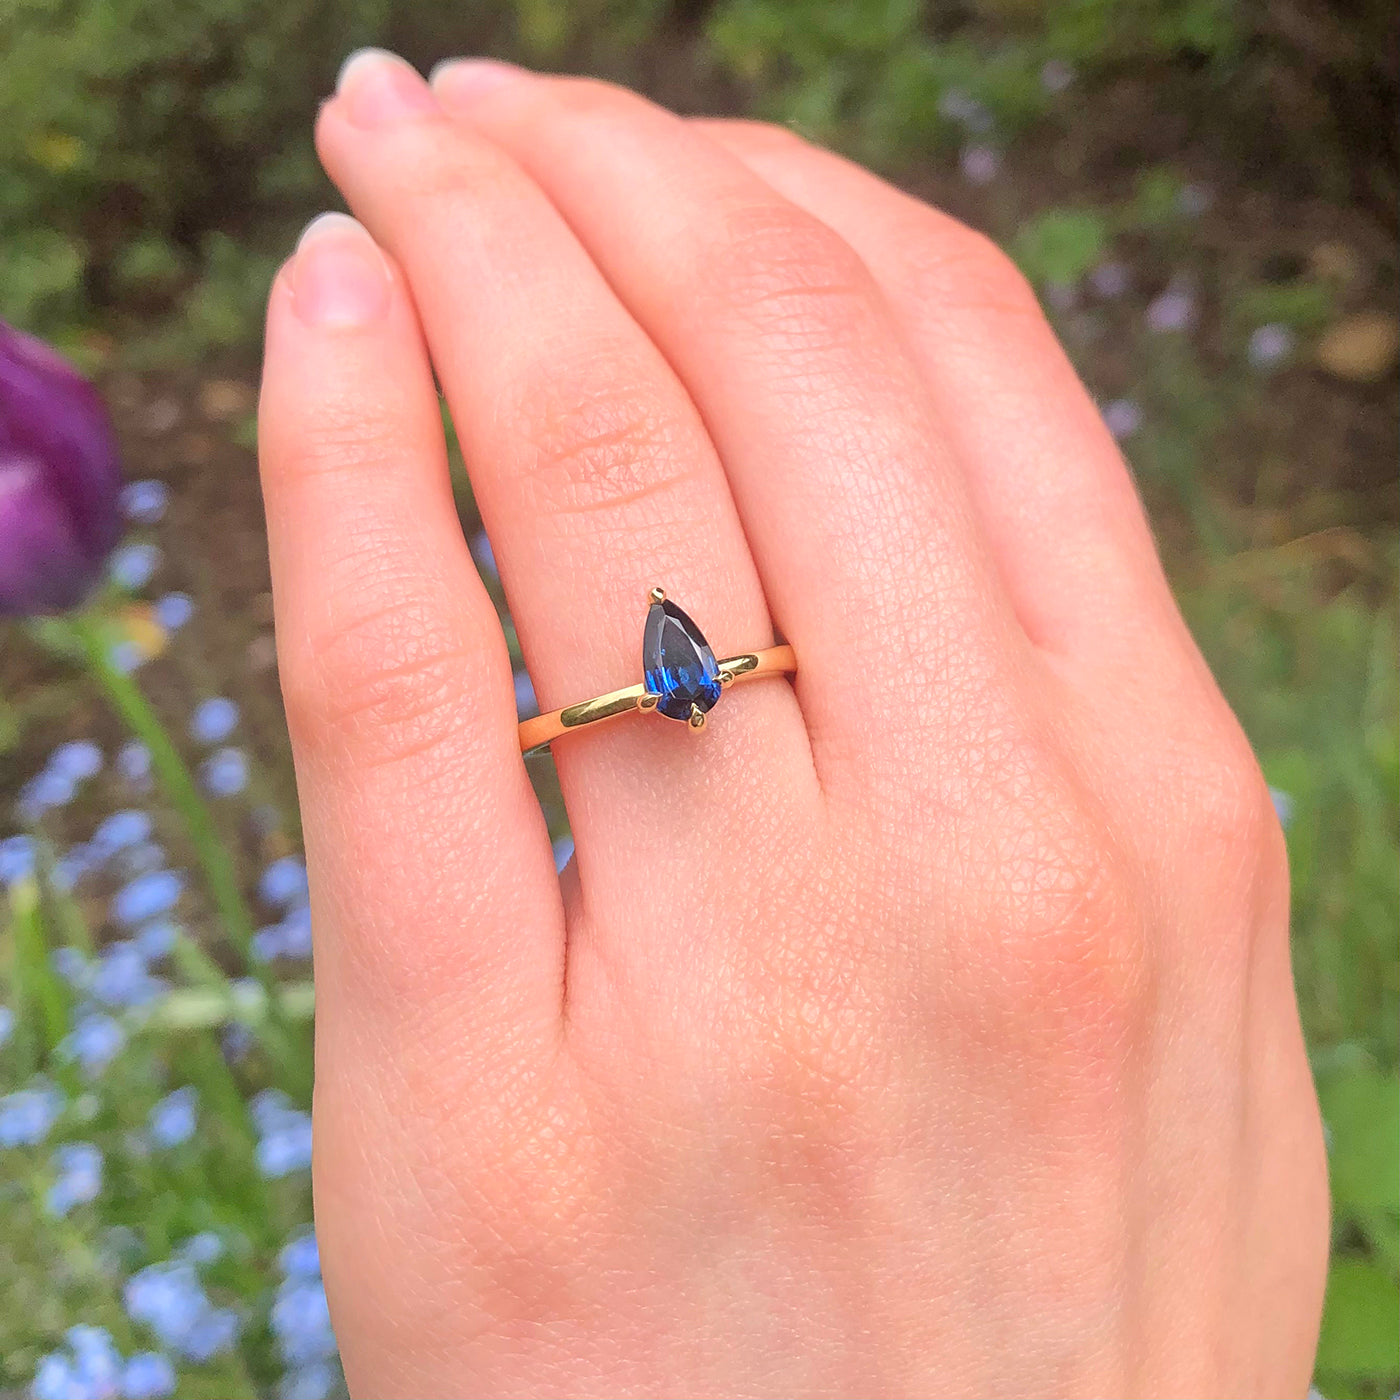 18ct Gold Deep Blue Sapphire Teardrop Ring (Size M 1/2, Resize G - P 1/2)